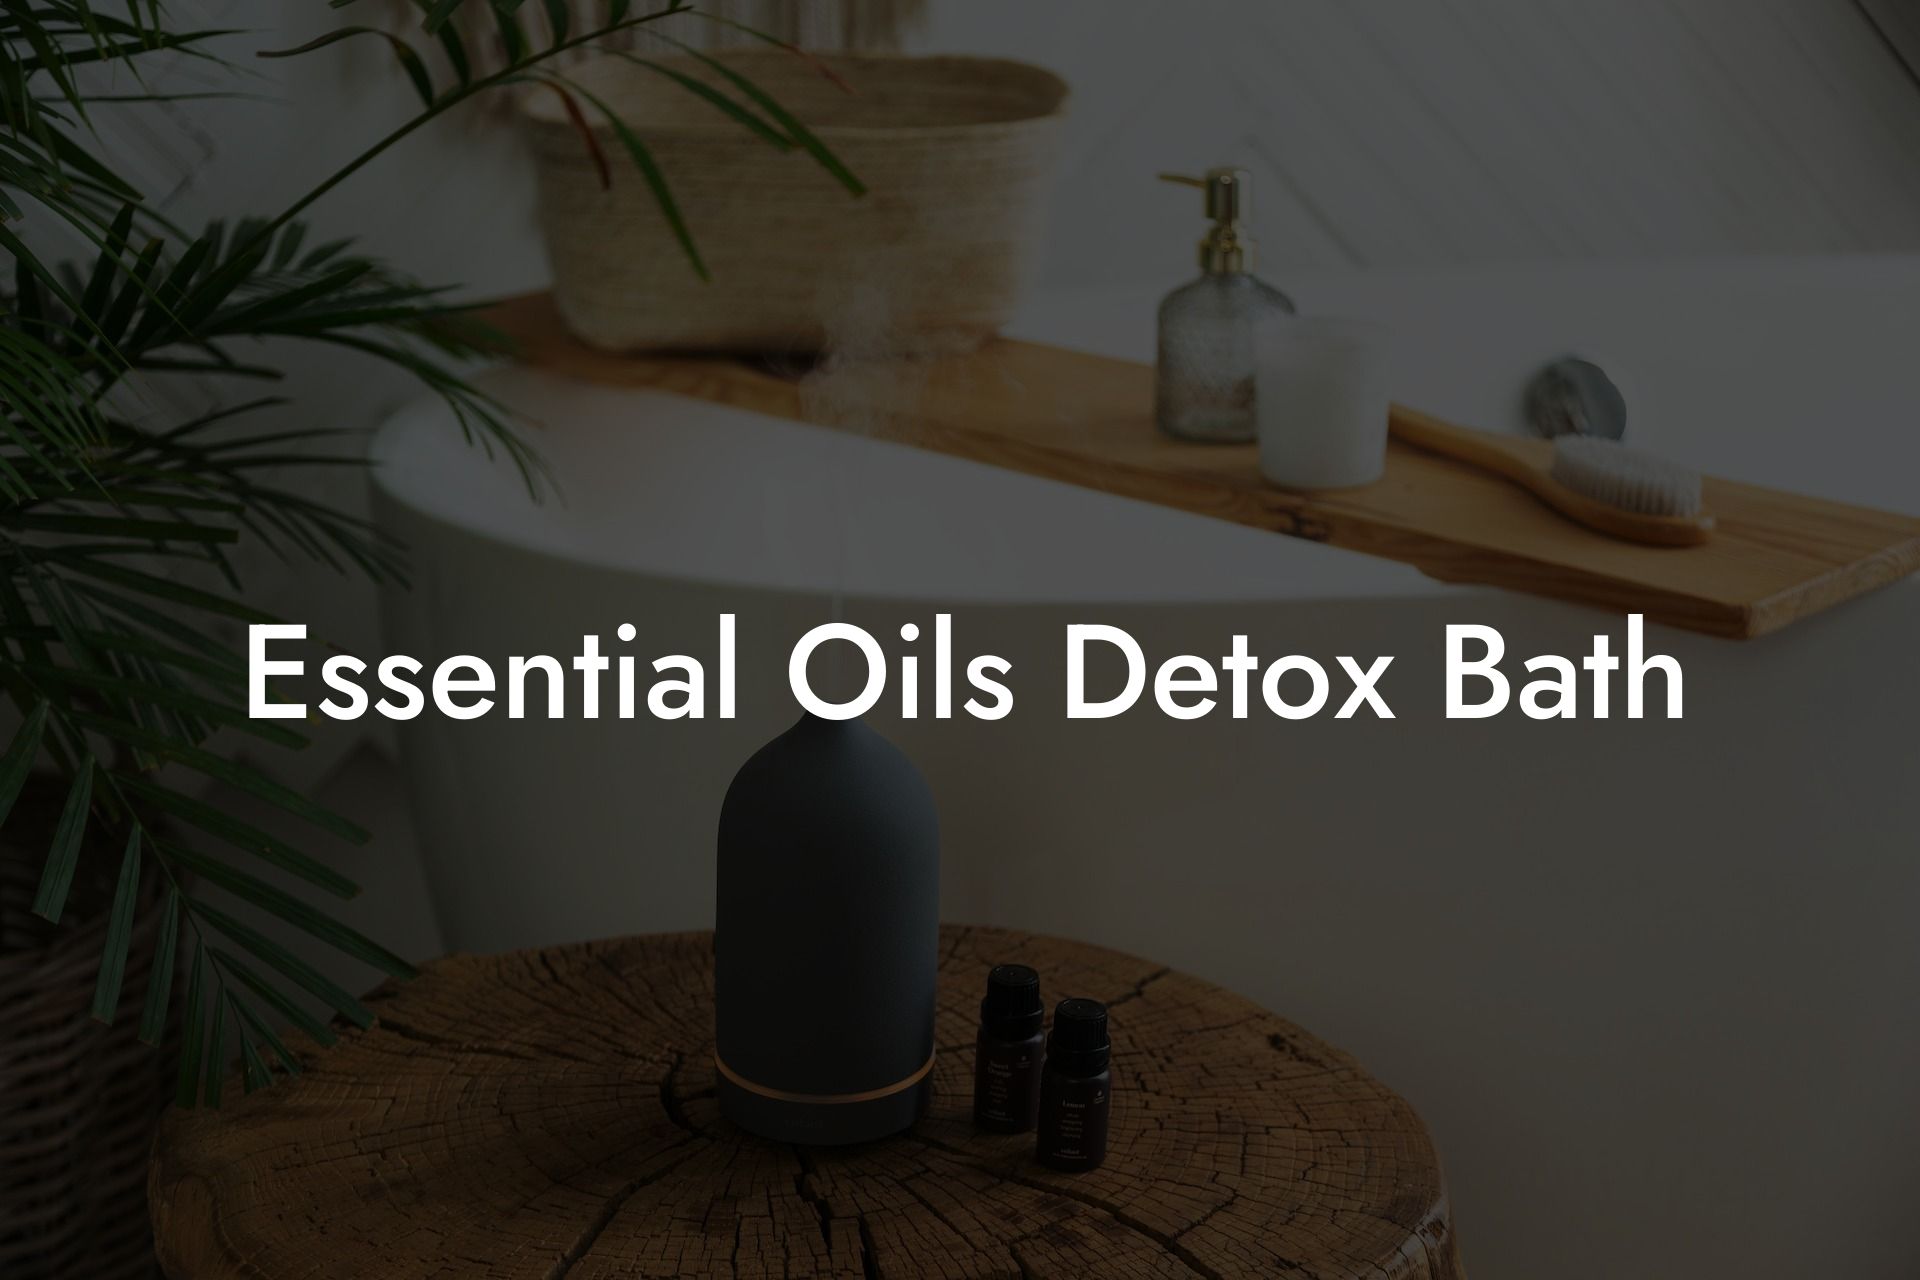 Essential Oils Detox Bath